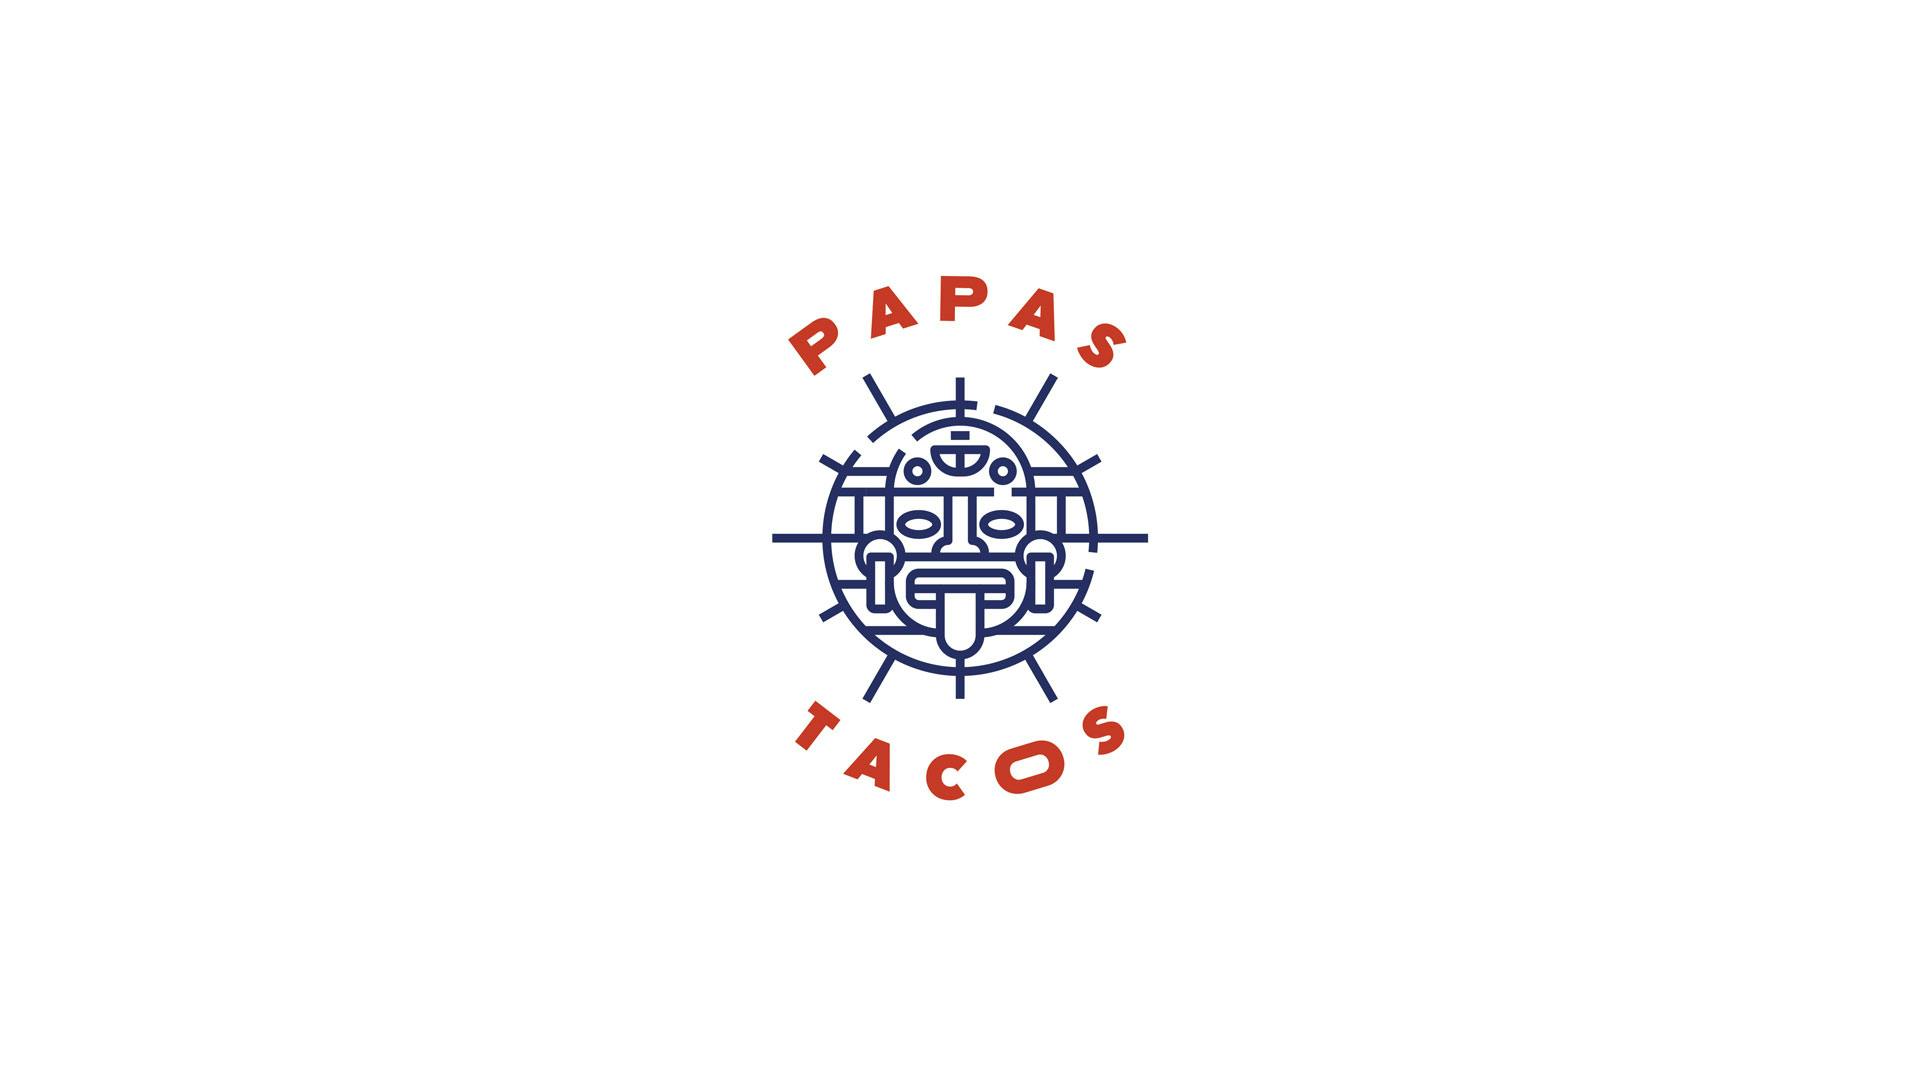 Papas Tacos - restaurant - Bordeaux - graphic identity - logo - logotype